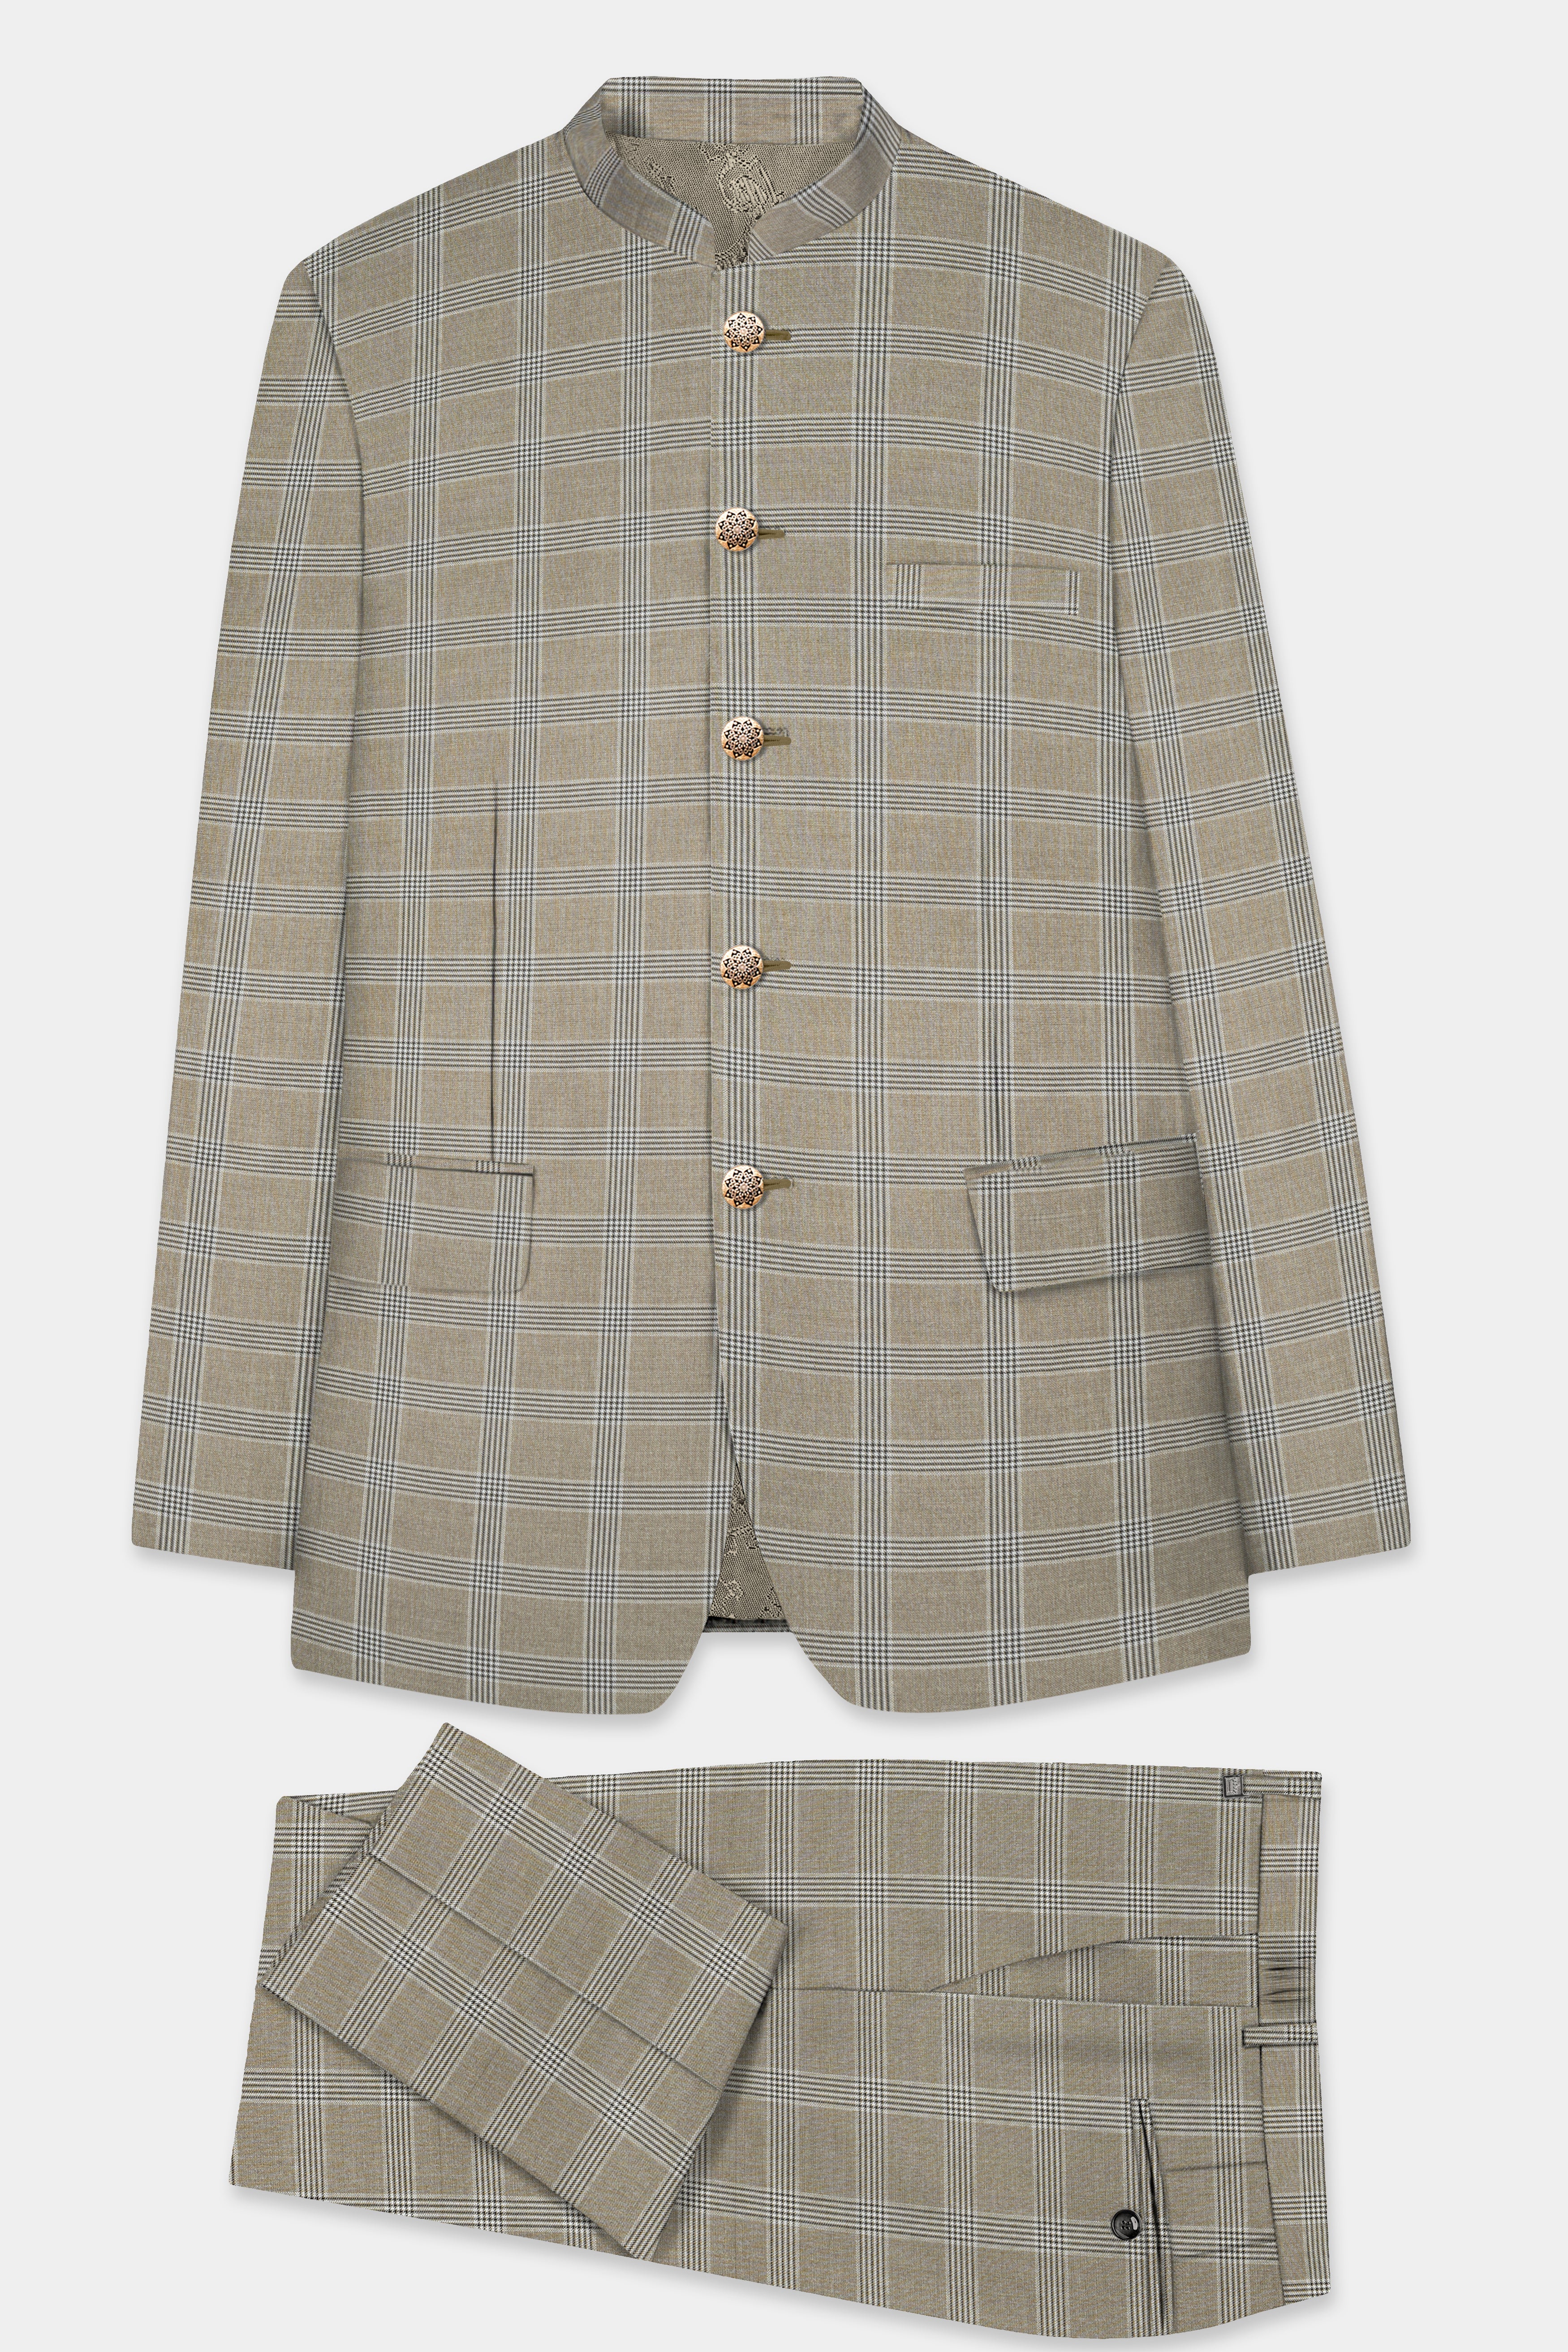 Sandrift Cream Plaid Wool Blend Bandhgala Suit